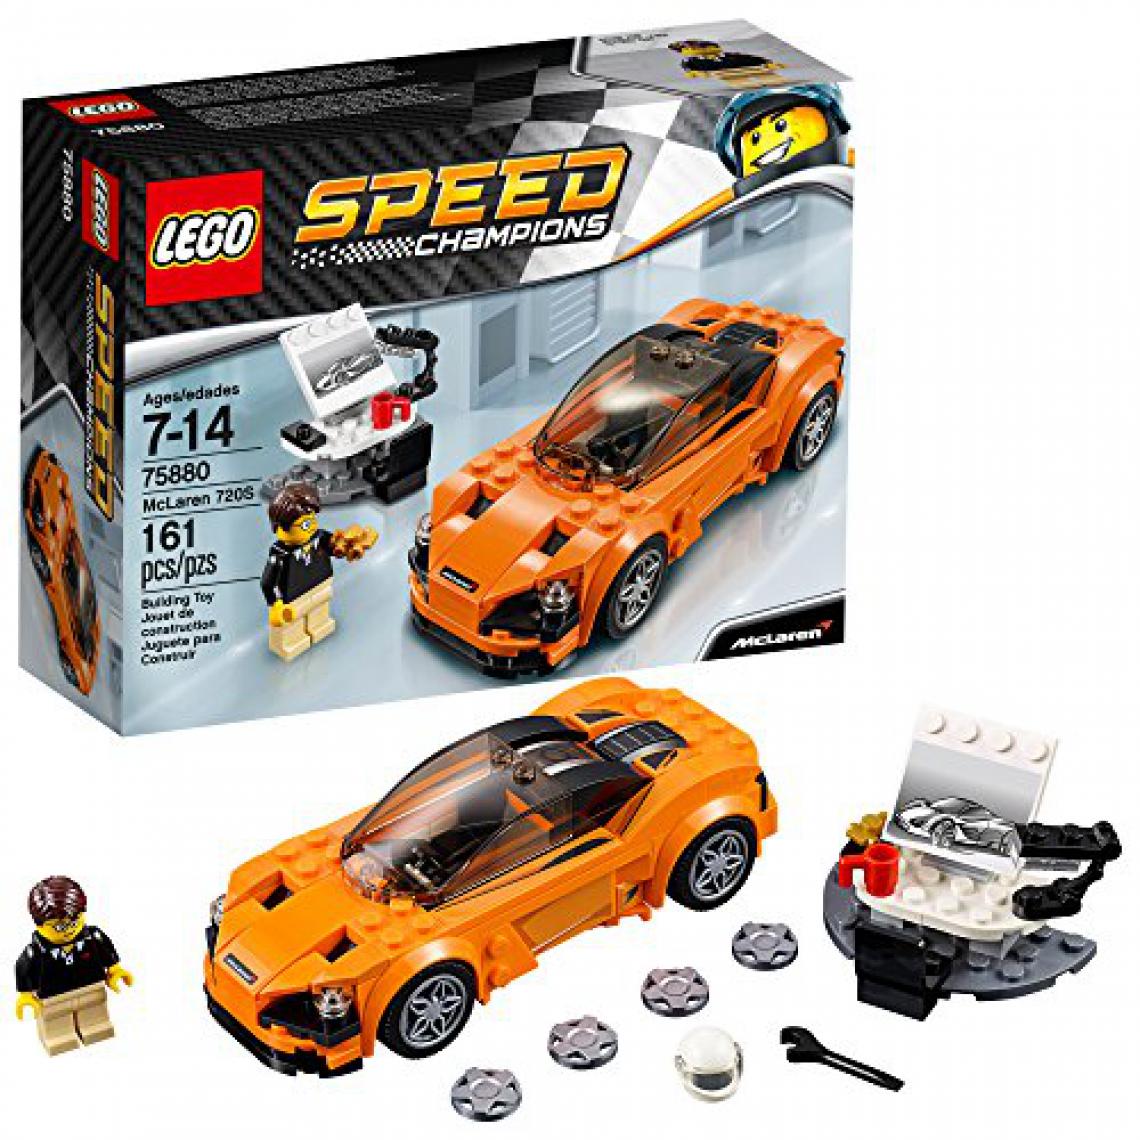 Lego - LEgO 75880 Speed ââchampions McLaren 720S Jouet de construction, 161 pièces, orange / noir - Briques et blocs